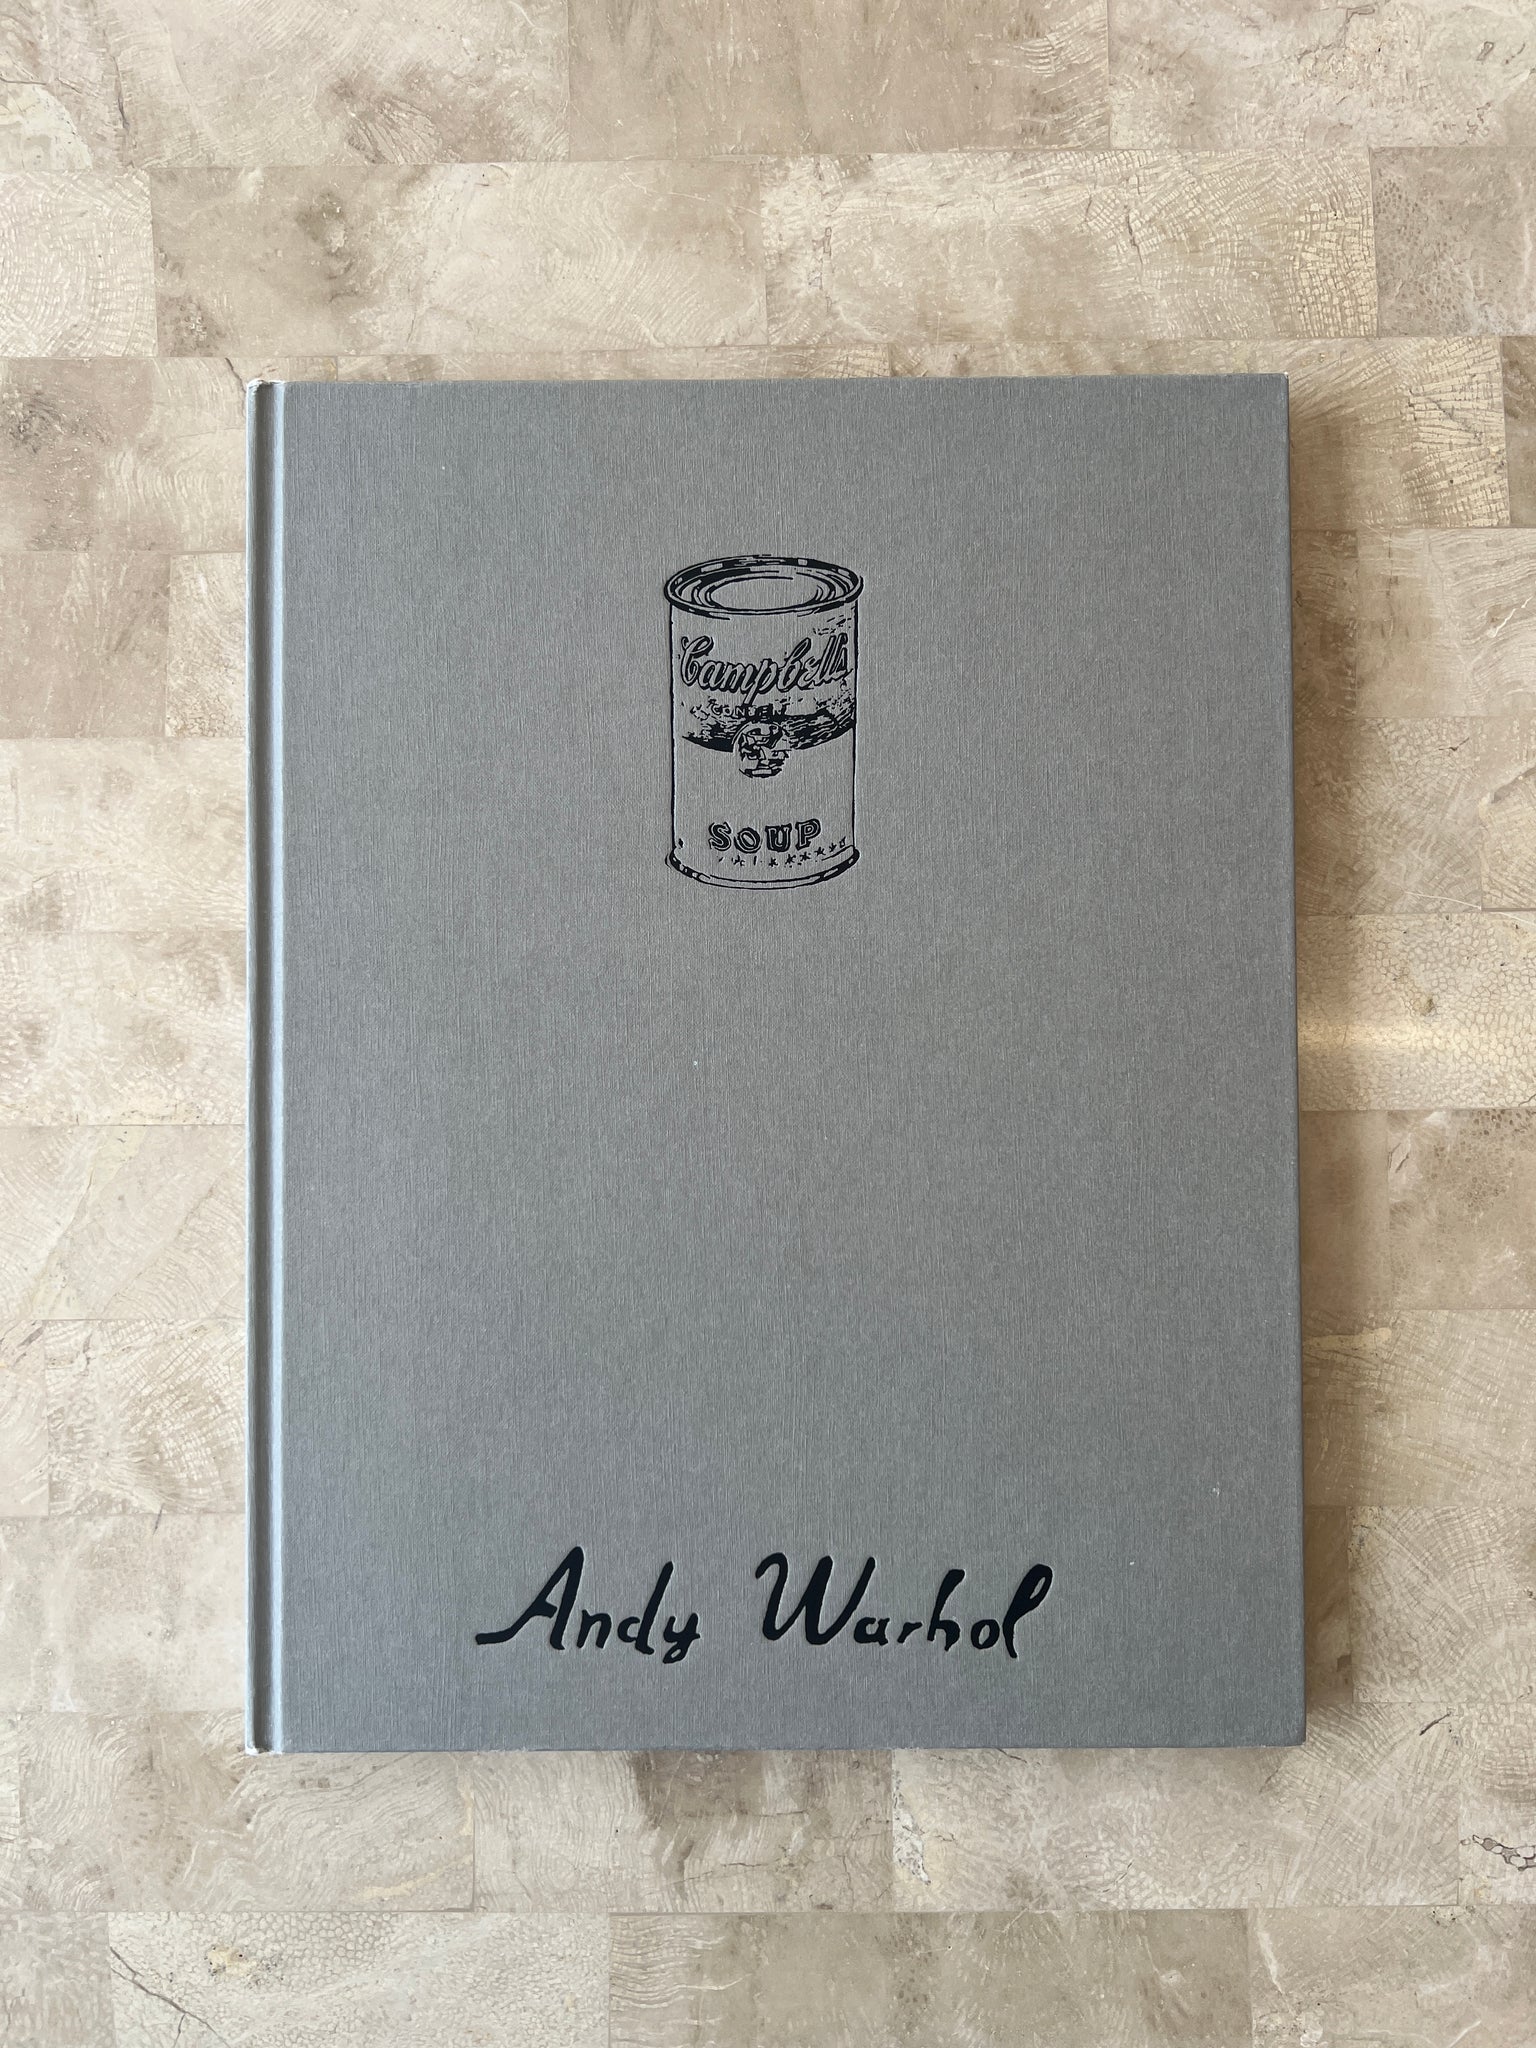 Andy Warhol, 1990